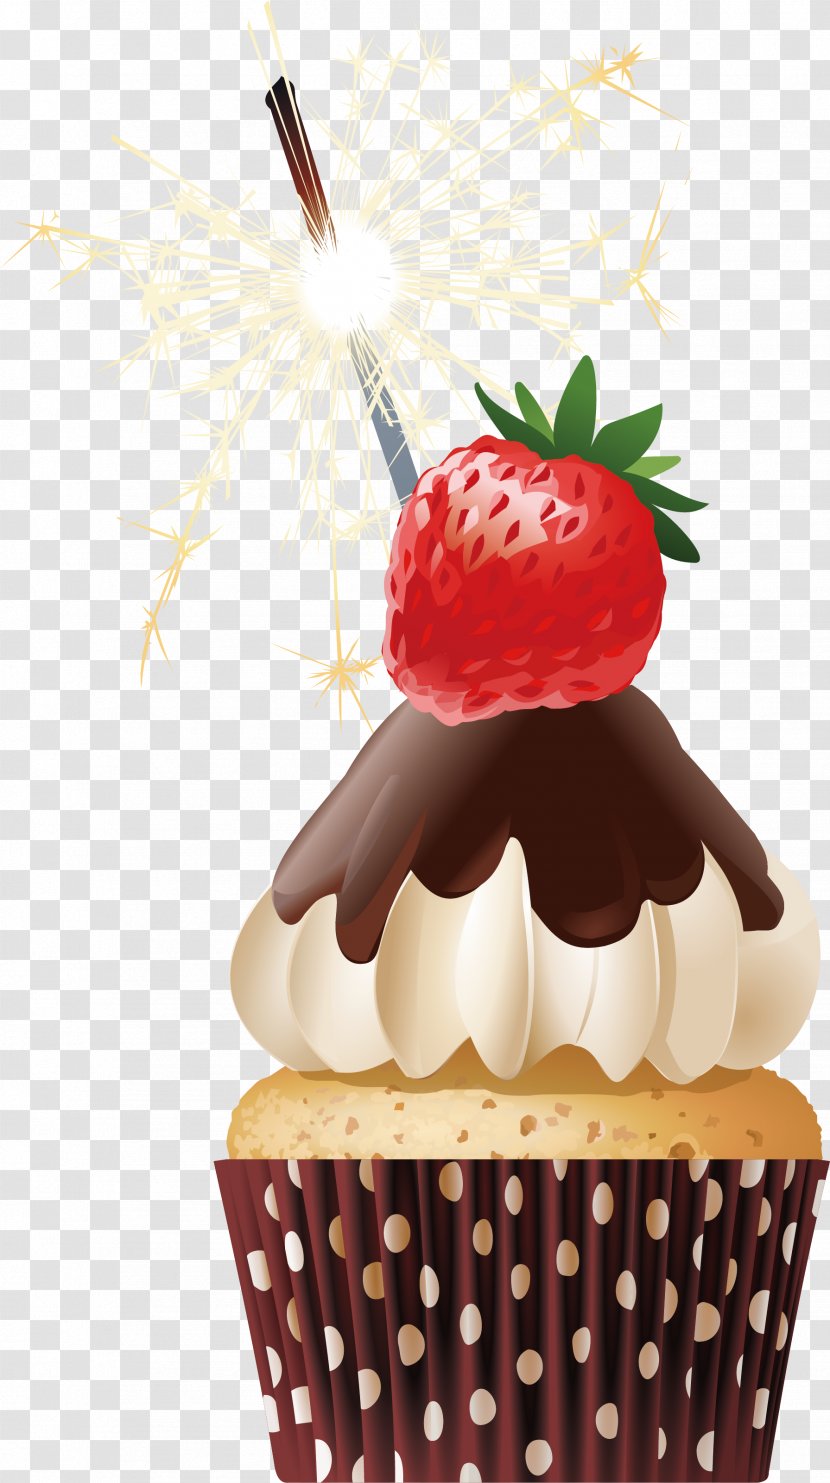 Cupcake Red Velvet Cake Fruitcake Chocolate Layer - Strawberries - Strawberry Transparent PNG